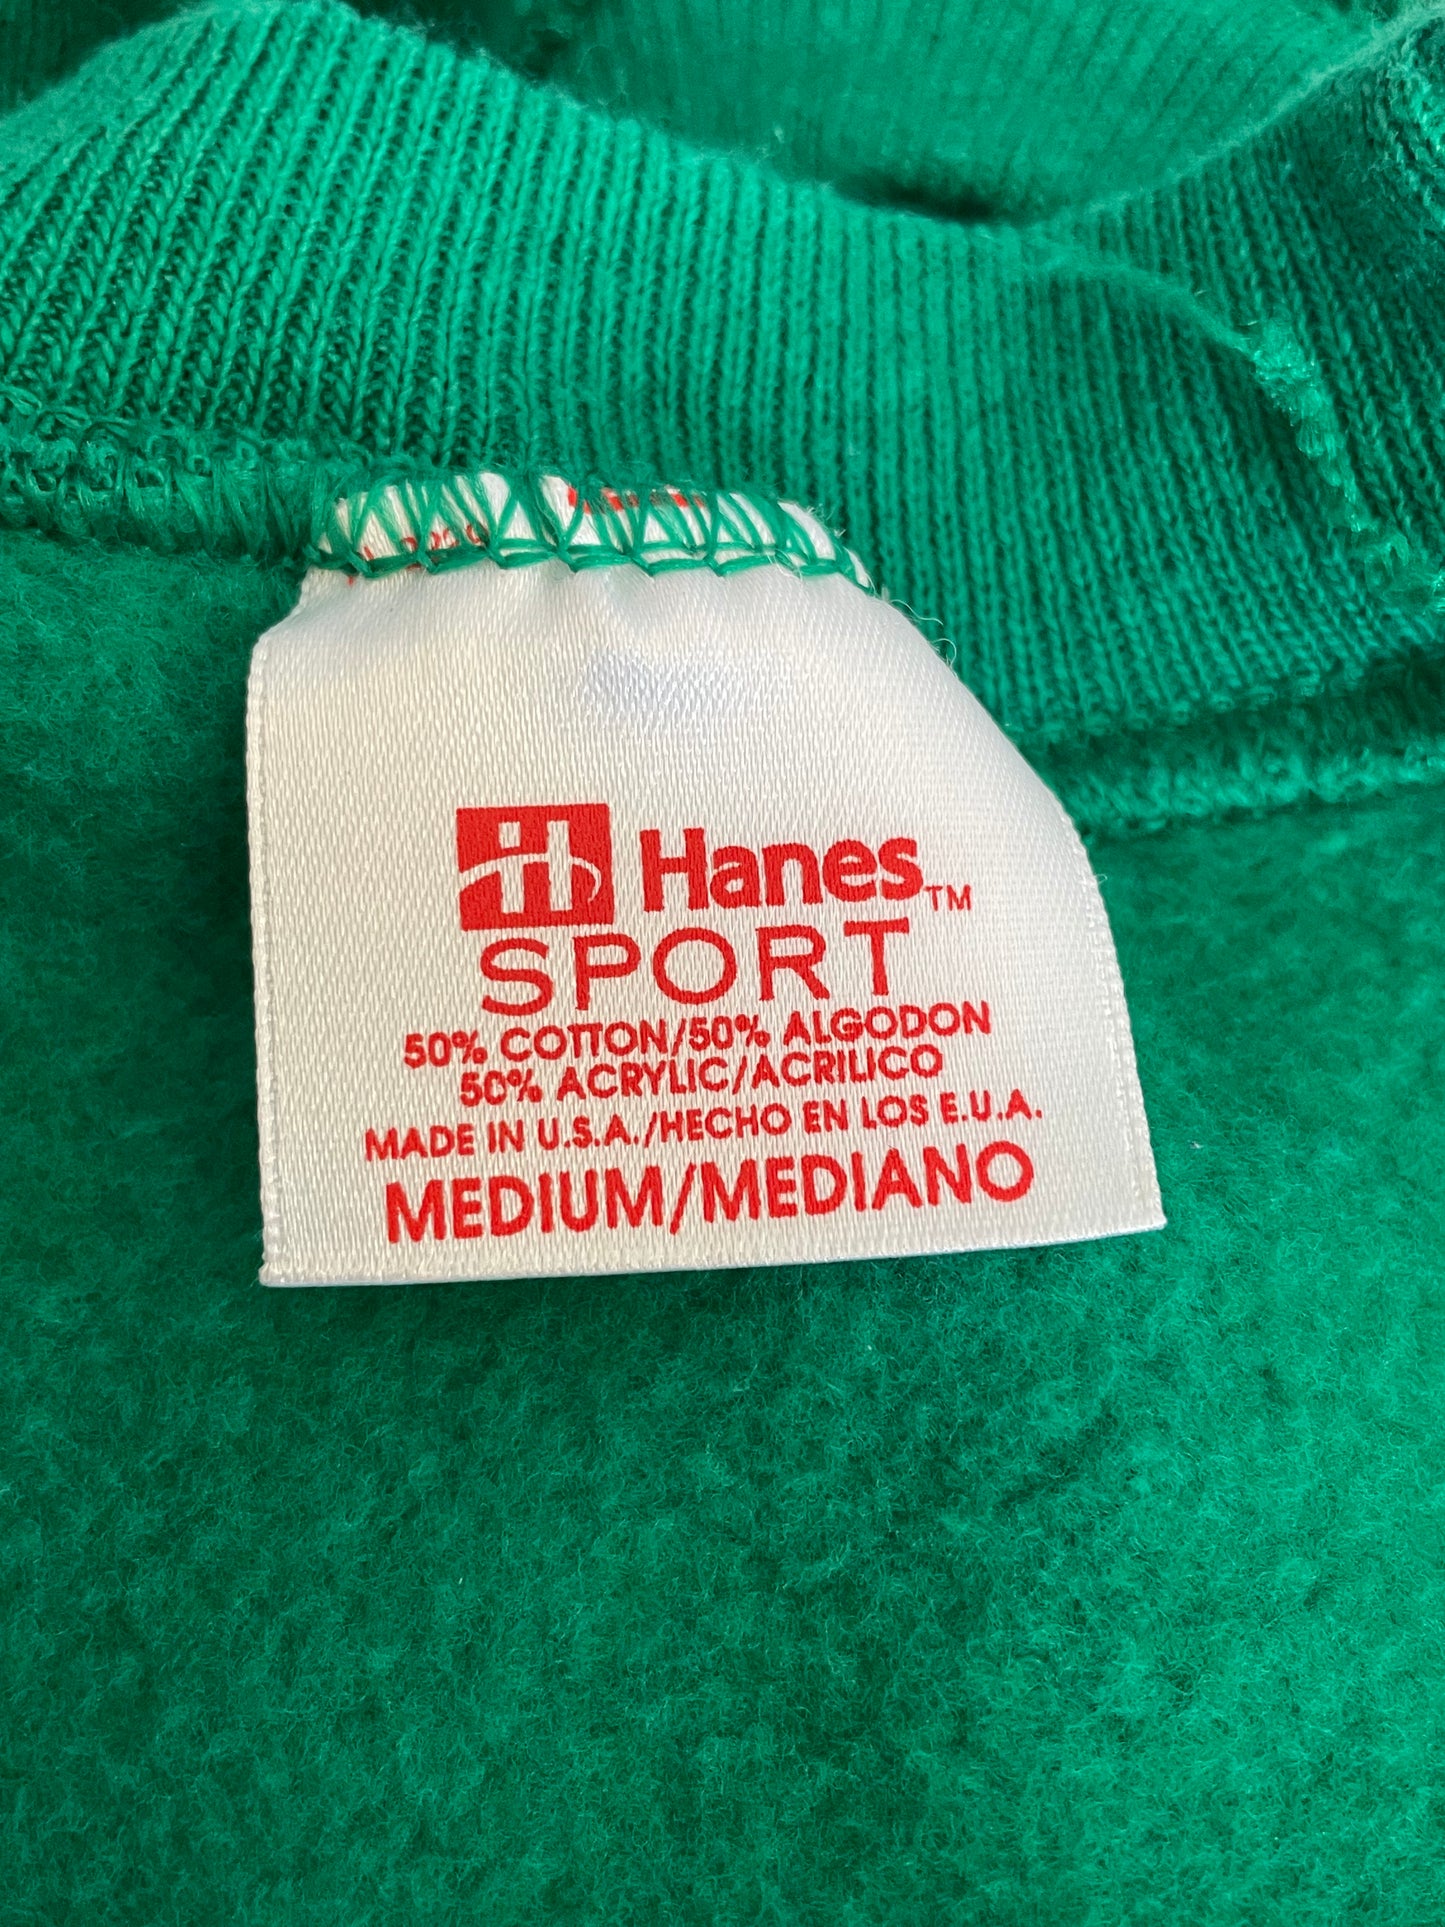 90s Blank Green Sweatshirt